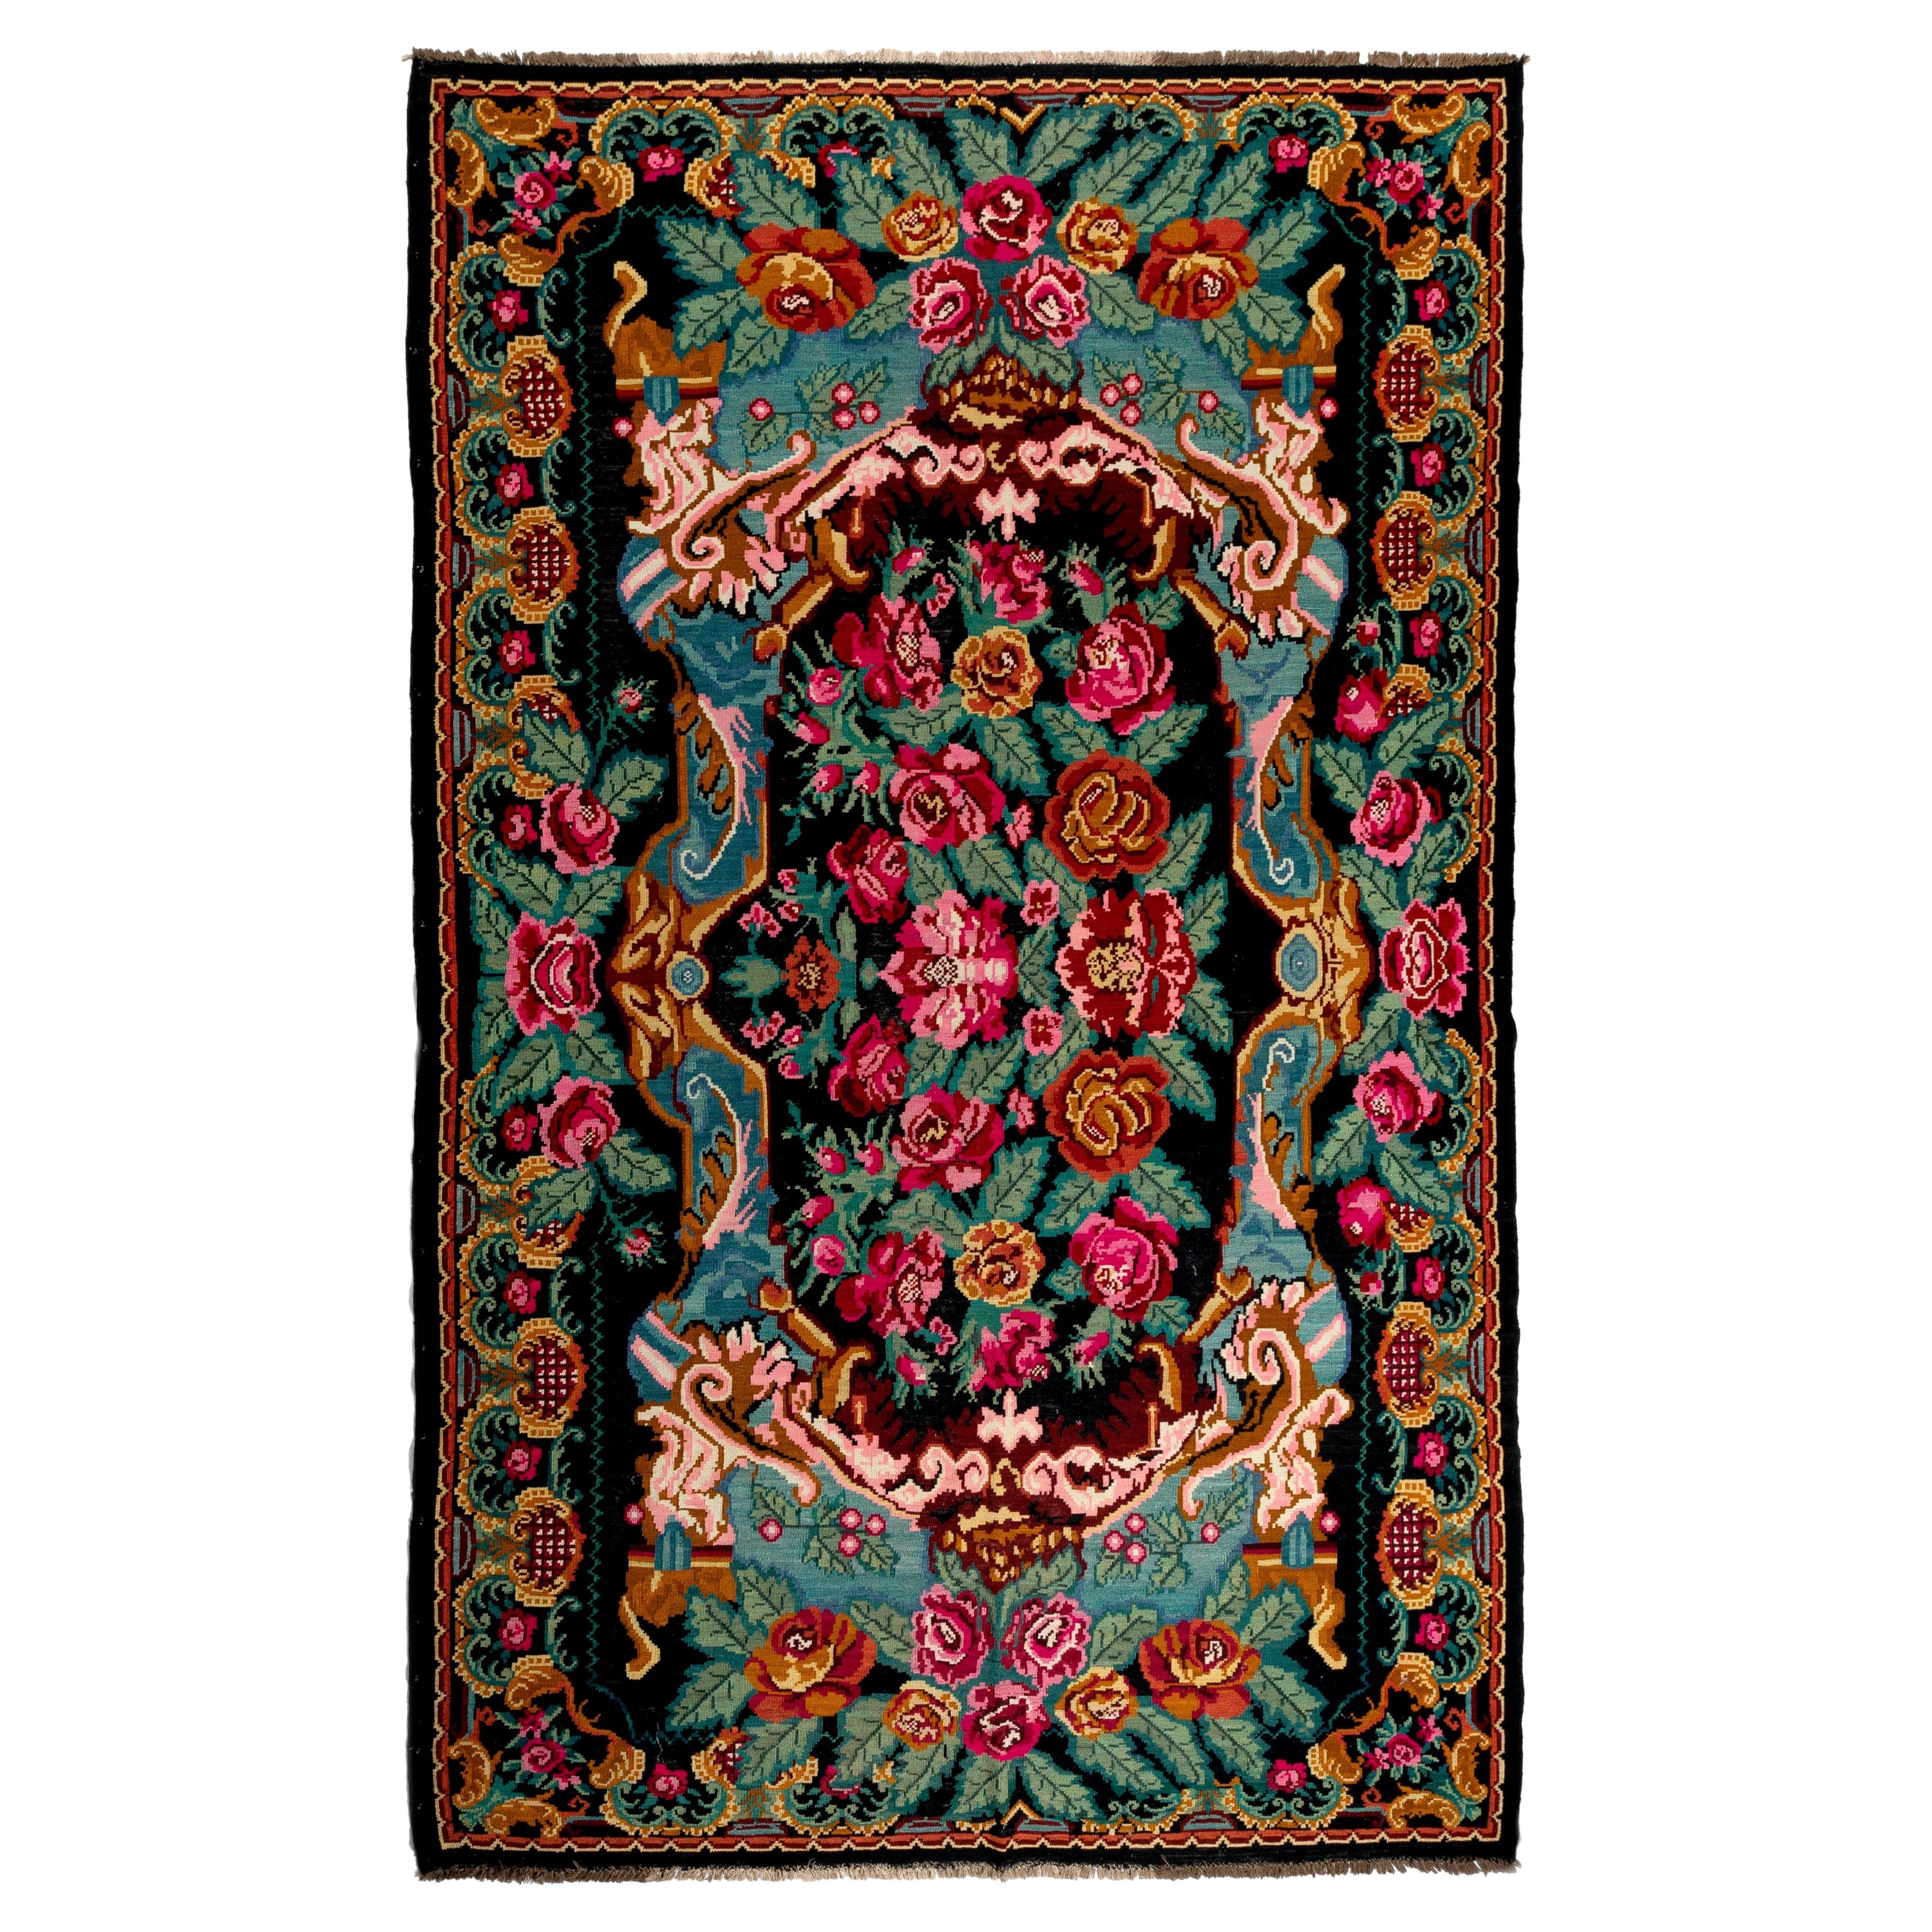 7.2x11.6 Ft Vintage Bessarabian Kilim, Floral Handwoven Wool Rug from Moldova